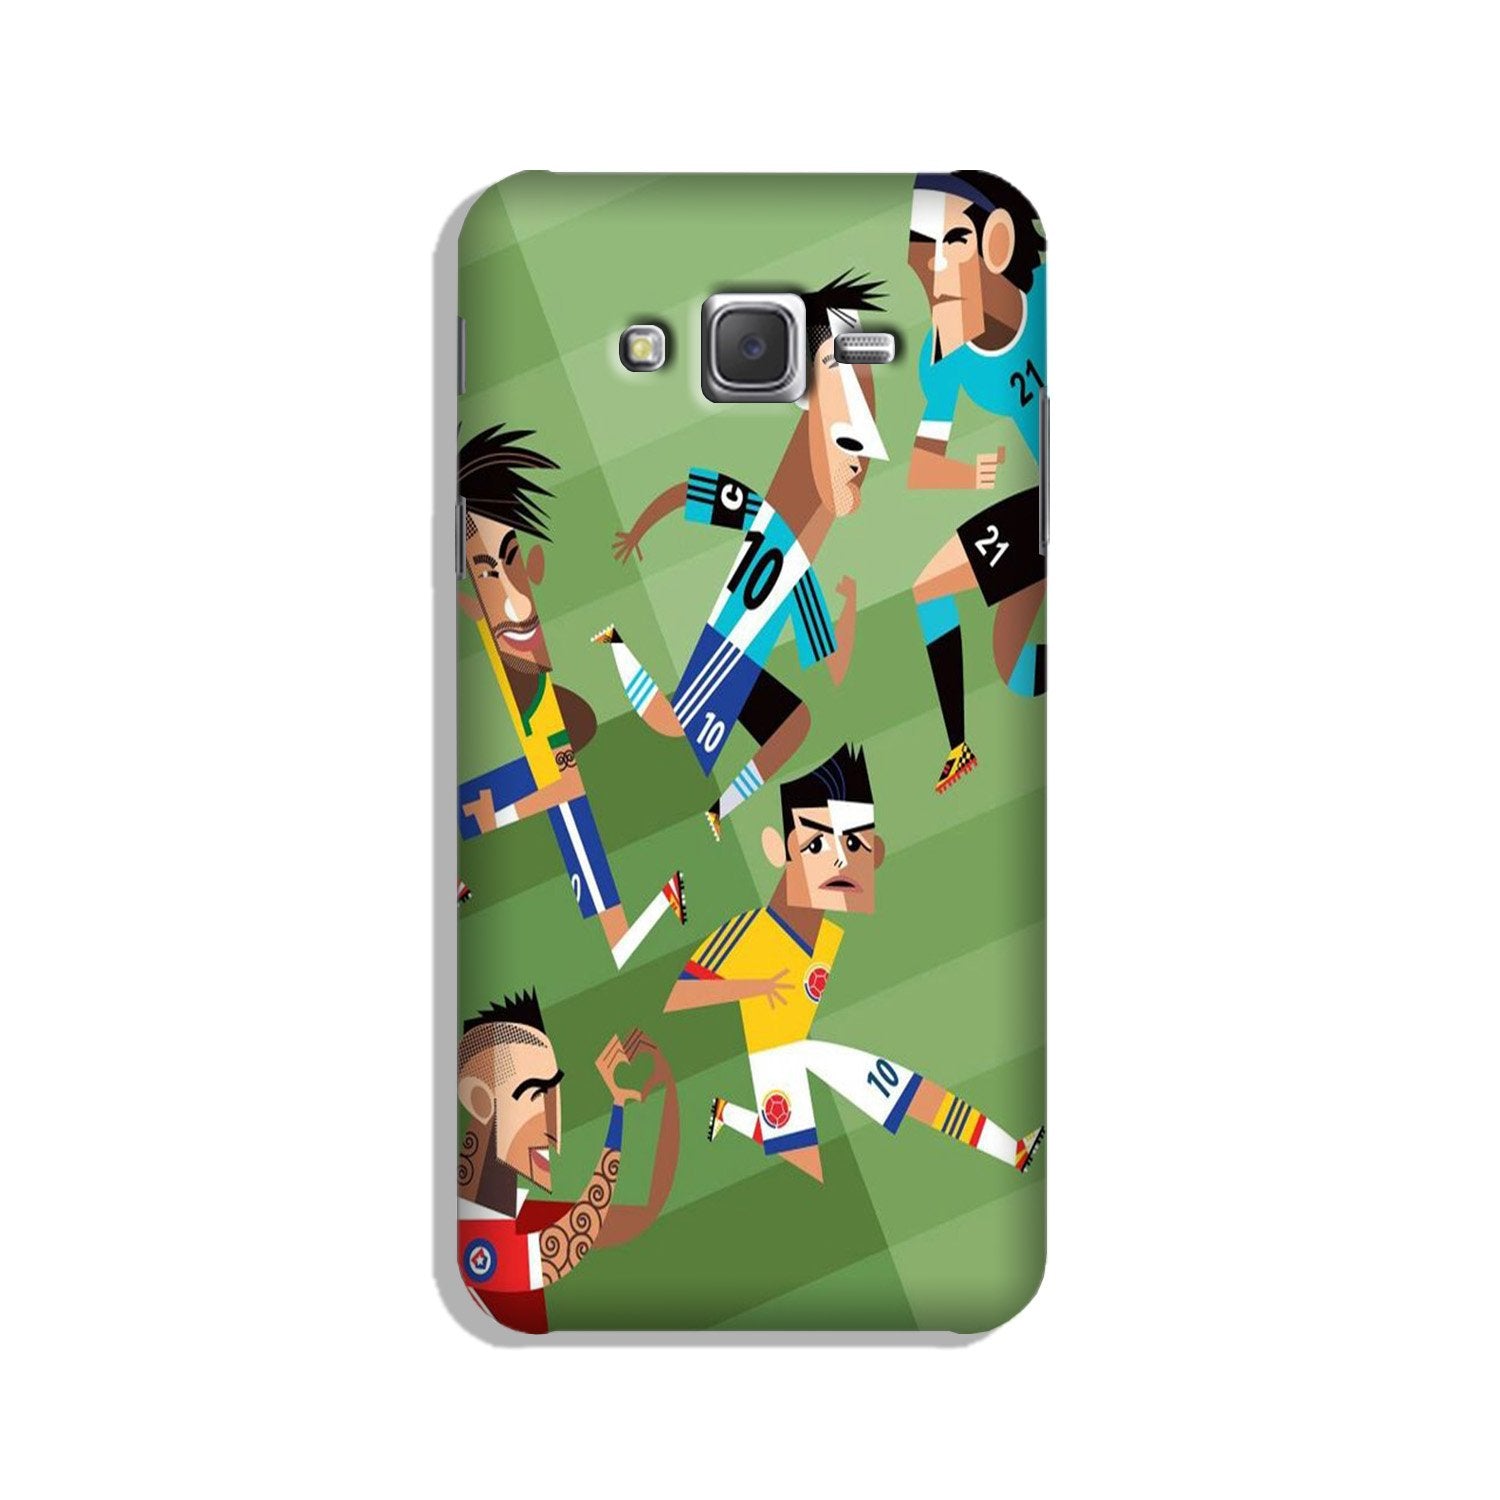 Football Case for Galaxy J7 Nxt  (Design - 166)